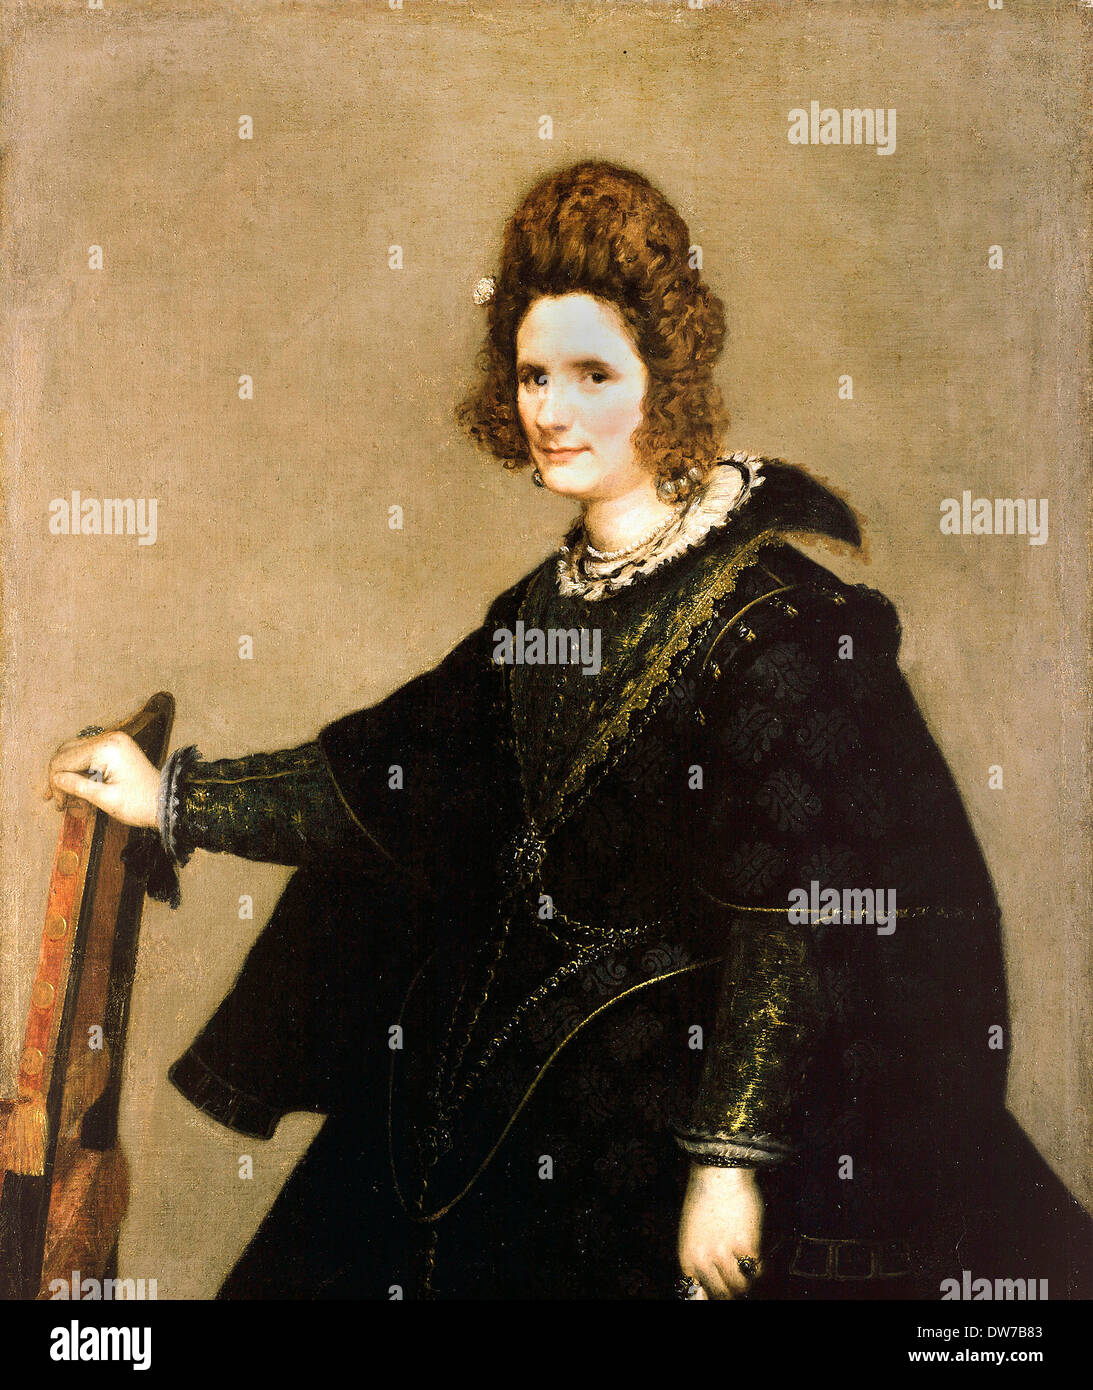 Diego Rodriguez de Silva y Velazquez, Portrait of a Lady. Circa 1630. Oil on canvas. Gemaldegalerie, Berlin, Germany. Stock Photo